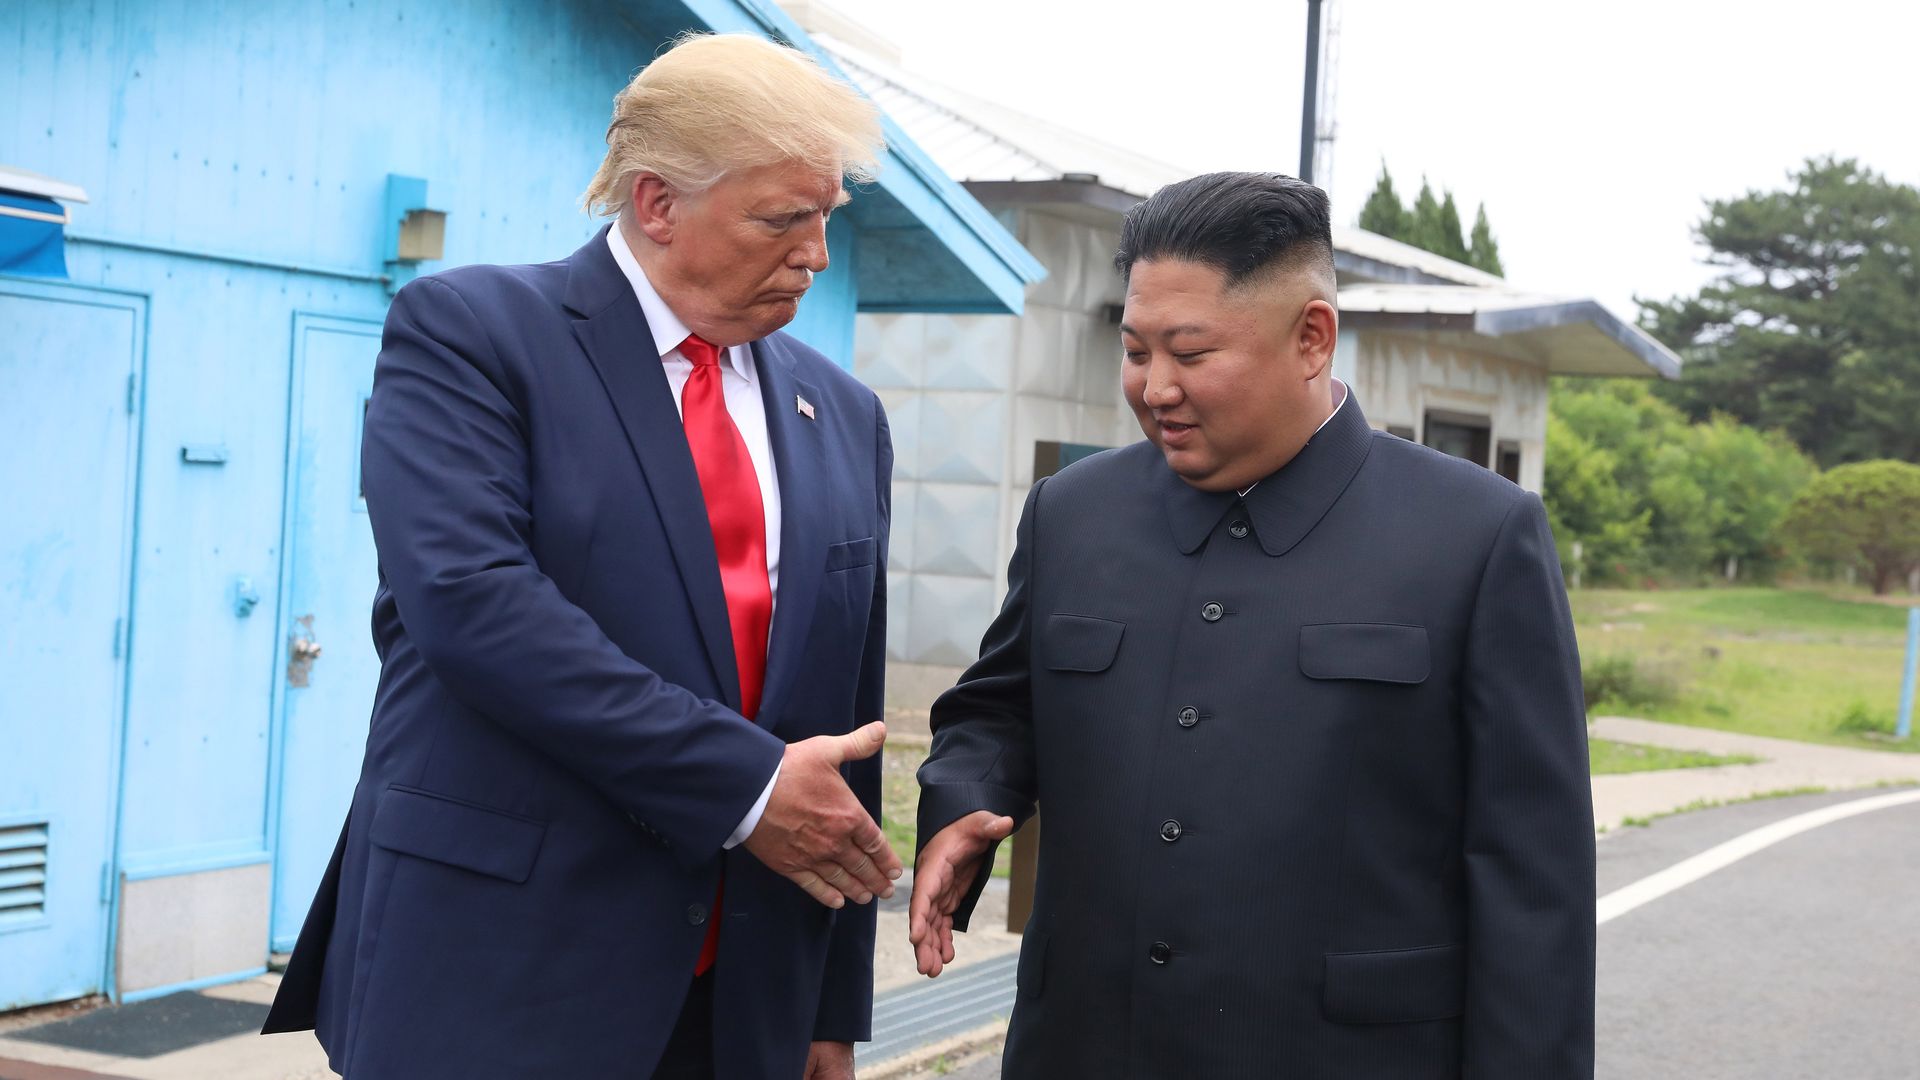 Trump shaking Kim's hand in the demilitarized zone